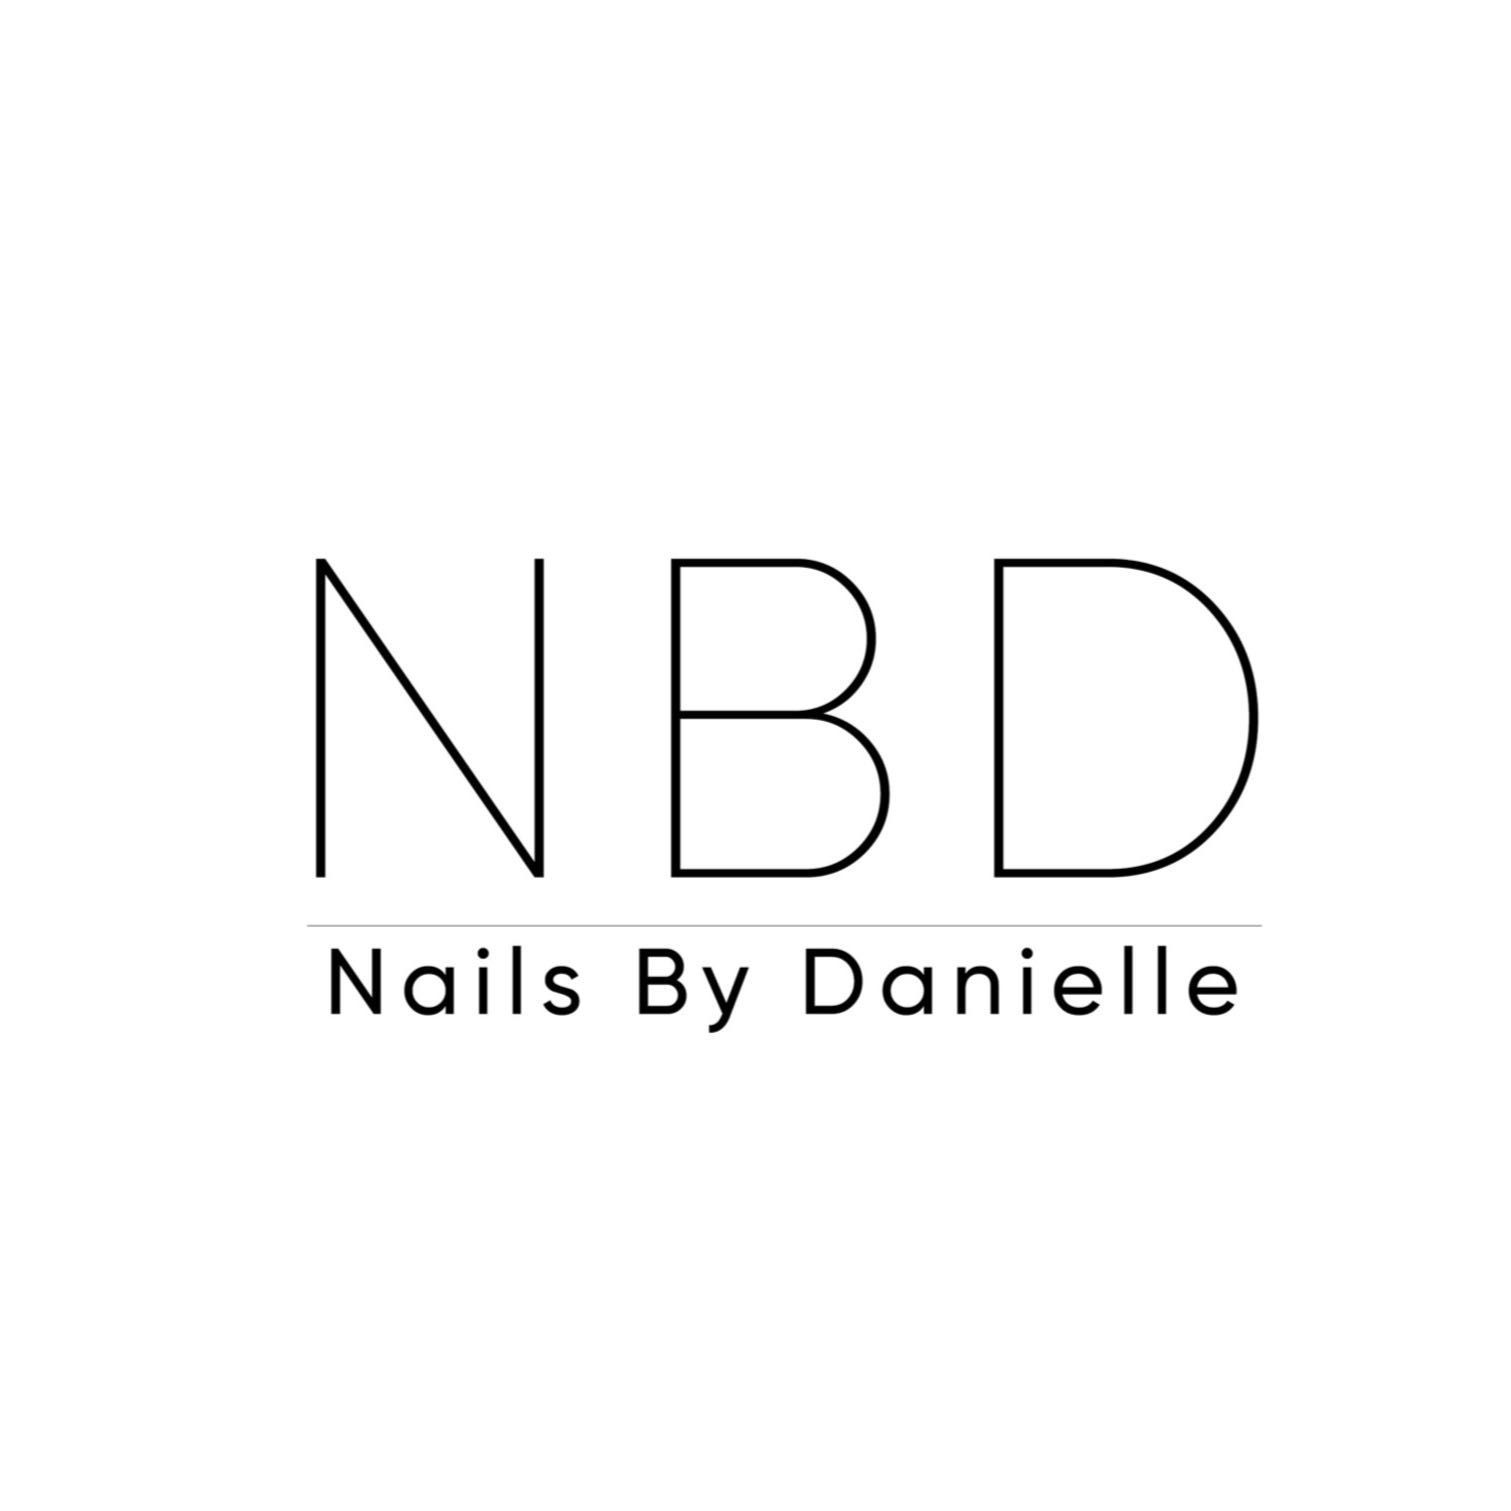 Nails By Danielle, 20 Pump Street, Third floor, BT48 6JG, Londonderry